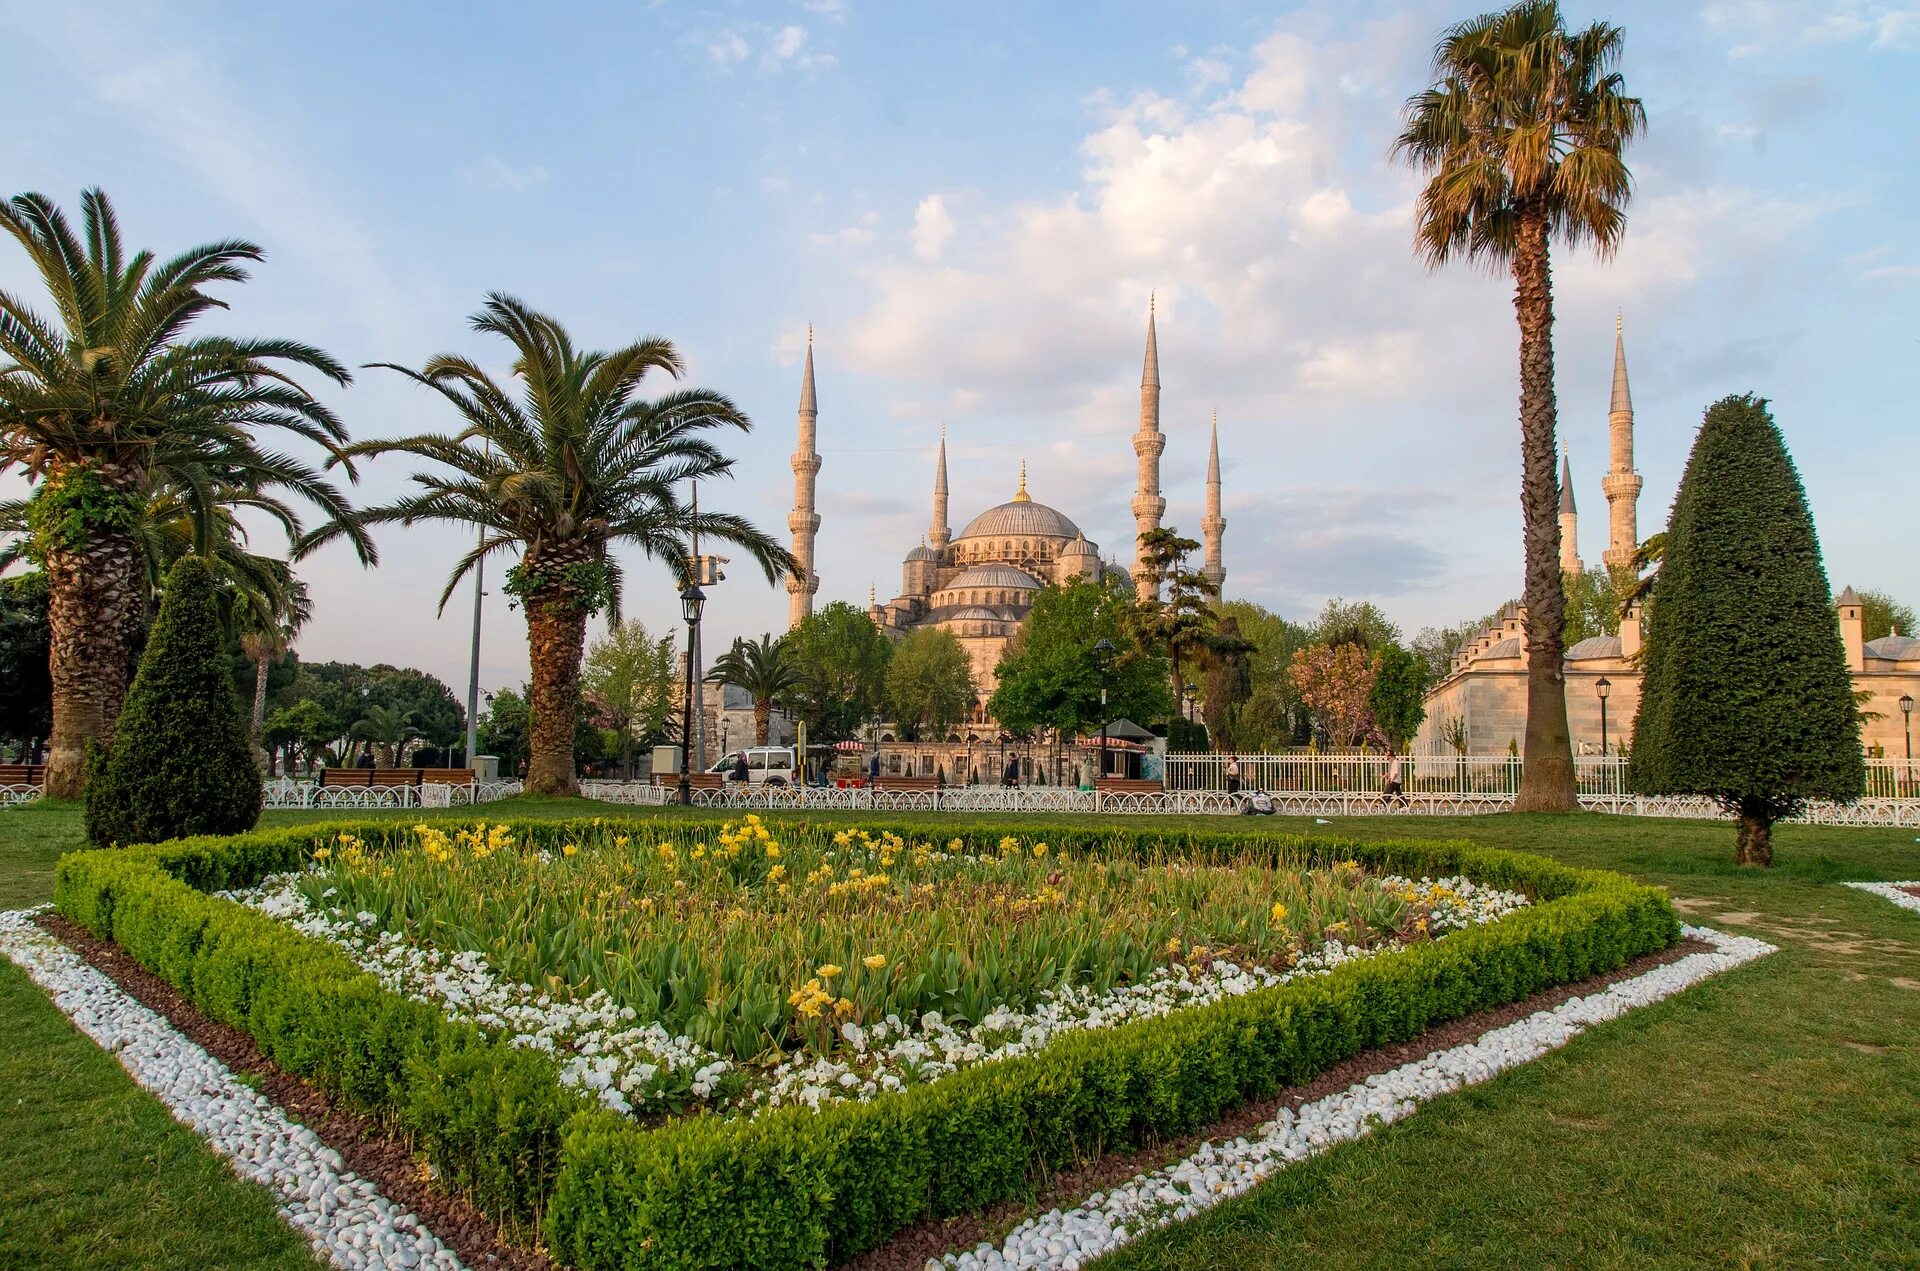 Стамбул старый город султанахмет. Султанахмет Стамбул. Султанахмет (площадь). Площадь Султанахмет, Стамбул #Турция. Площадь и мечеть Султанахмет.